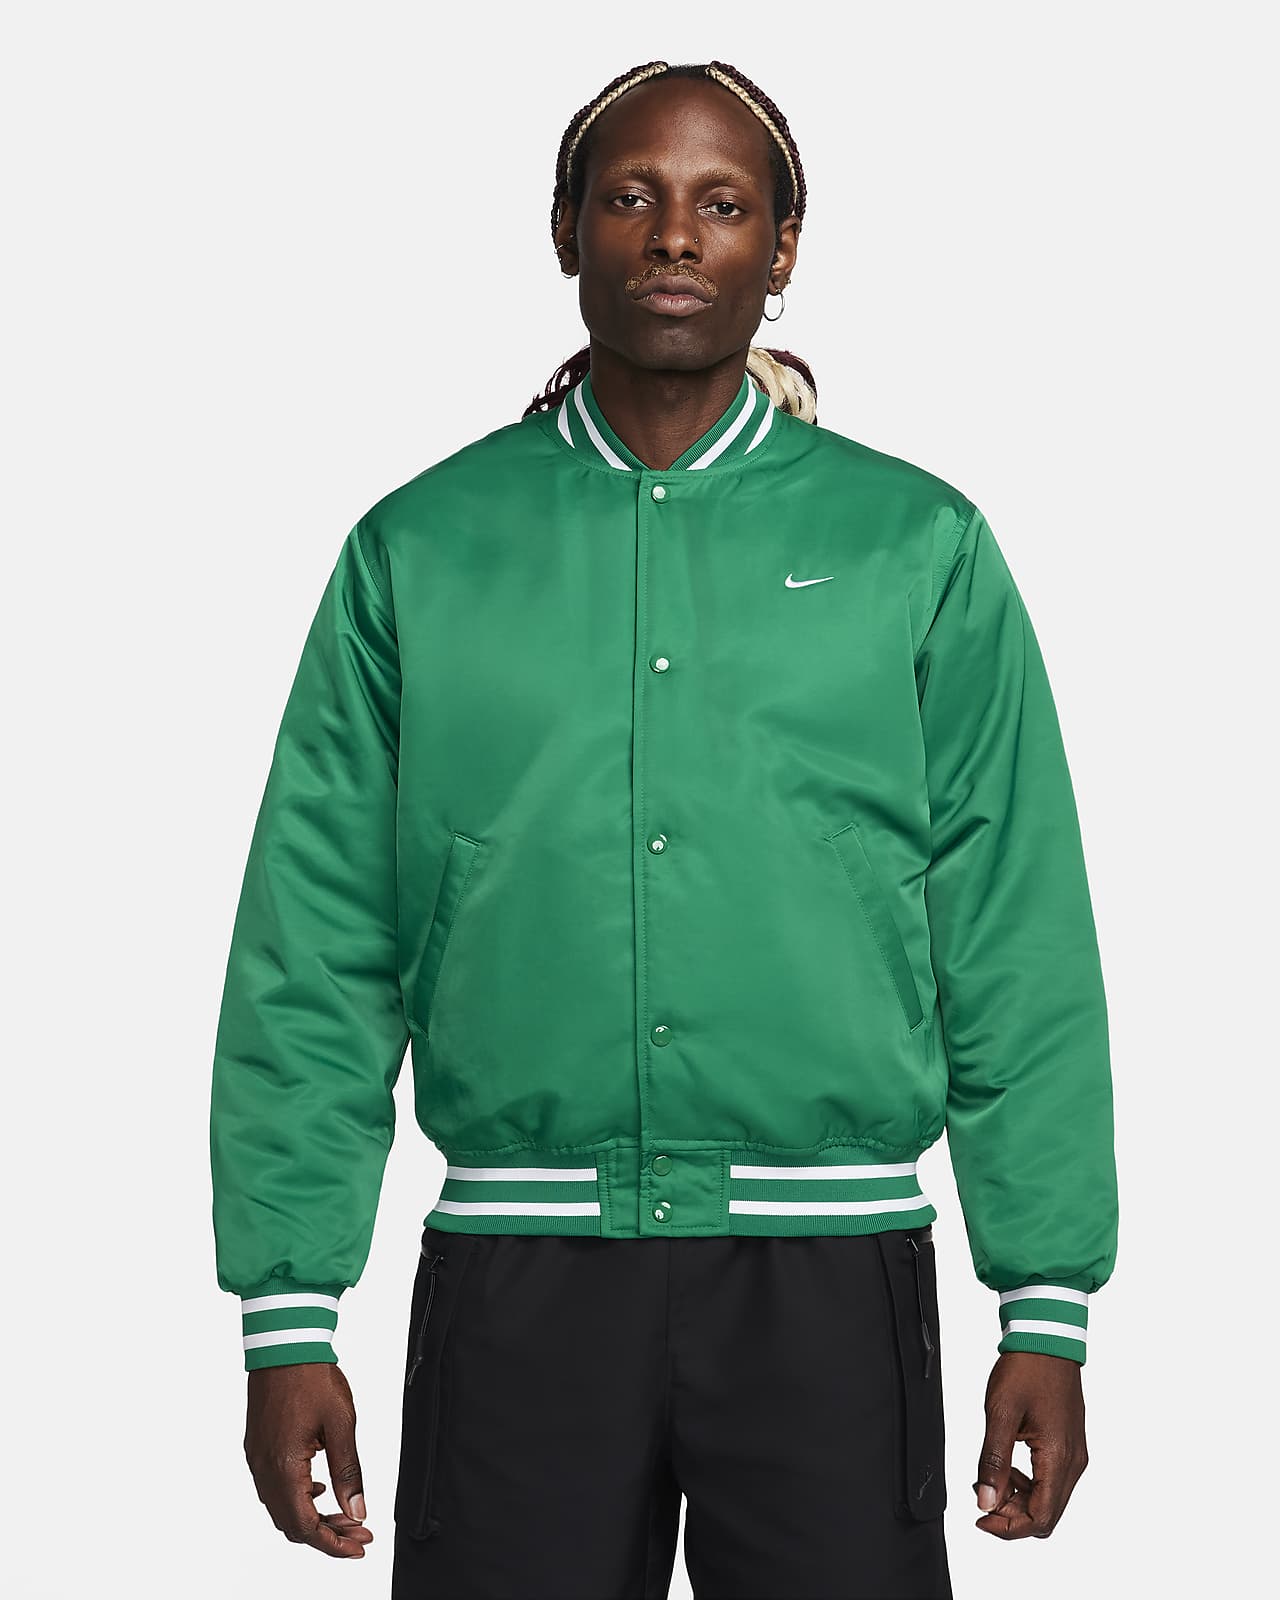 Nike Authentics Men's Dugout Jacket. Nike LU